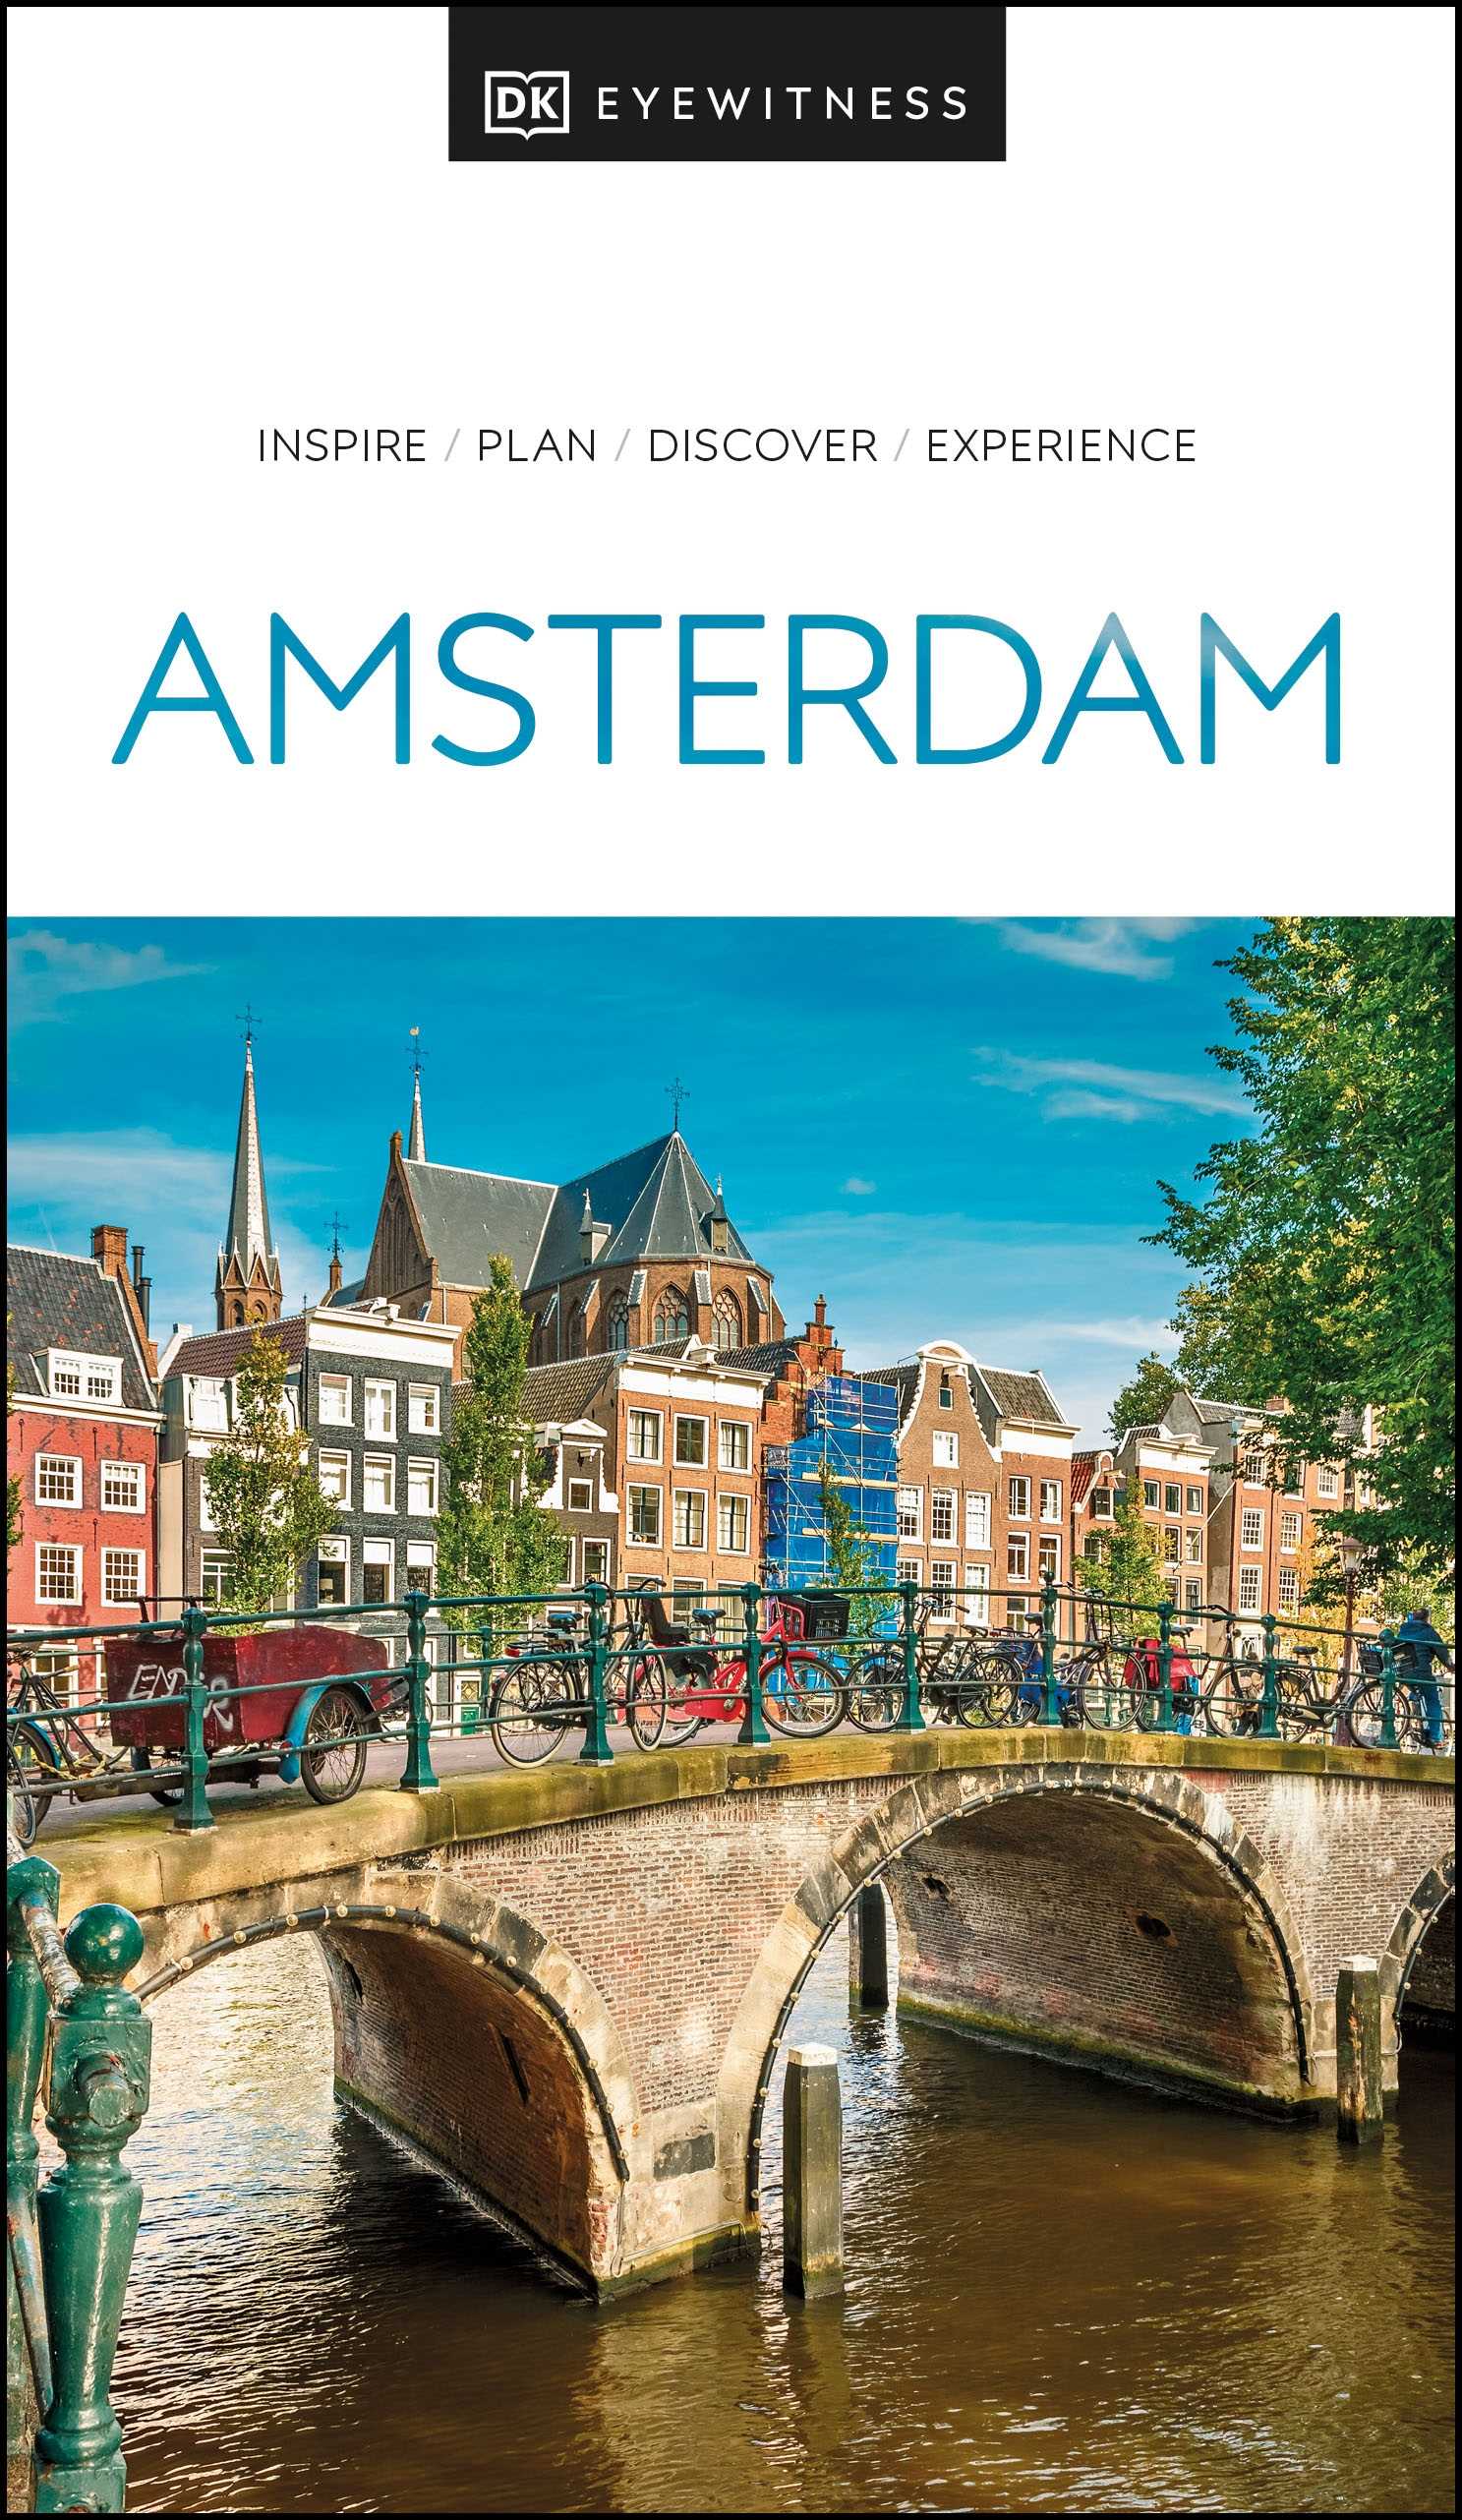 DK Eyewitness Amsterdam (2021 Edition)